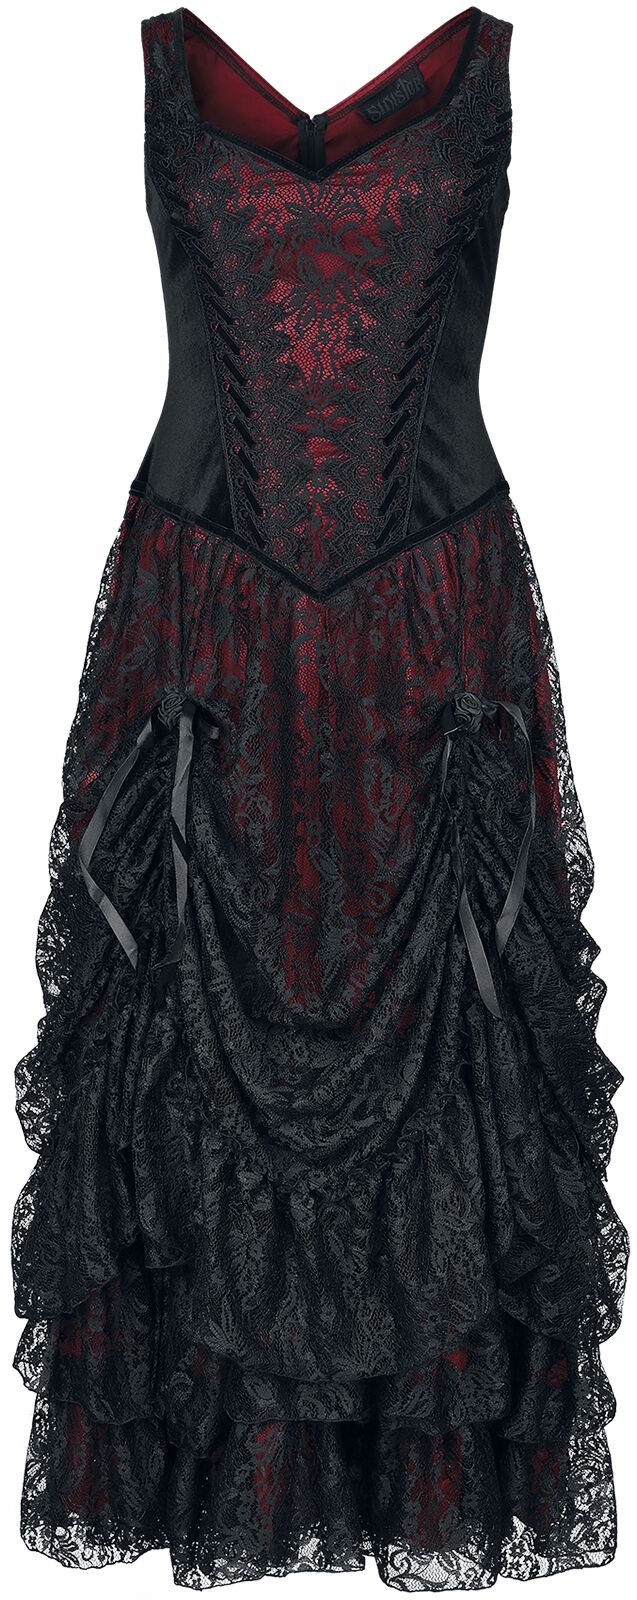 Sinister Gothic Longdress Langes Kleid schwarz rot in 3XL